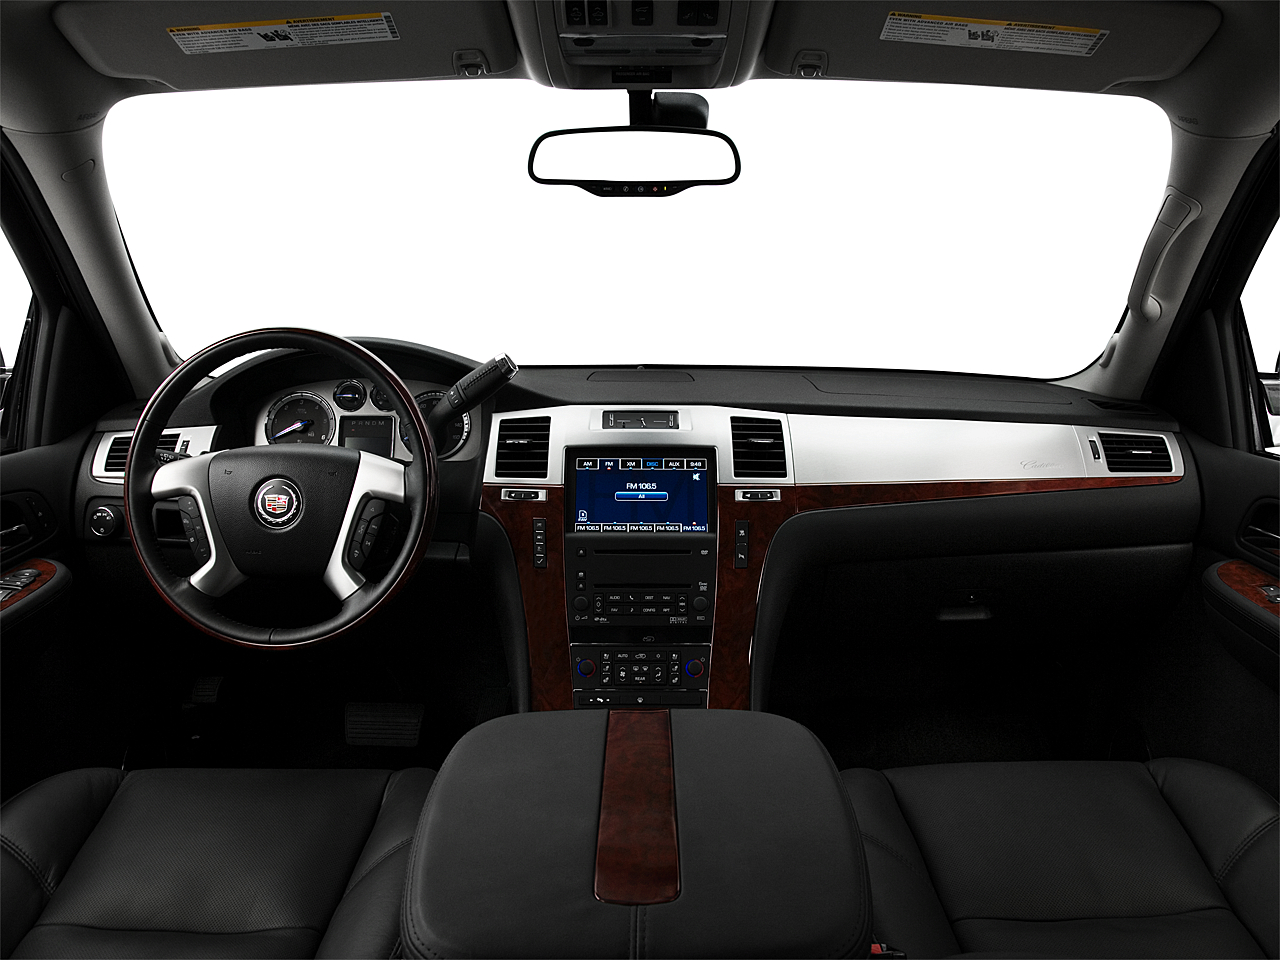 2009 Cadillac Escalade ESV AWD 4dr SUV - Research - GrooveCar